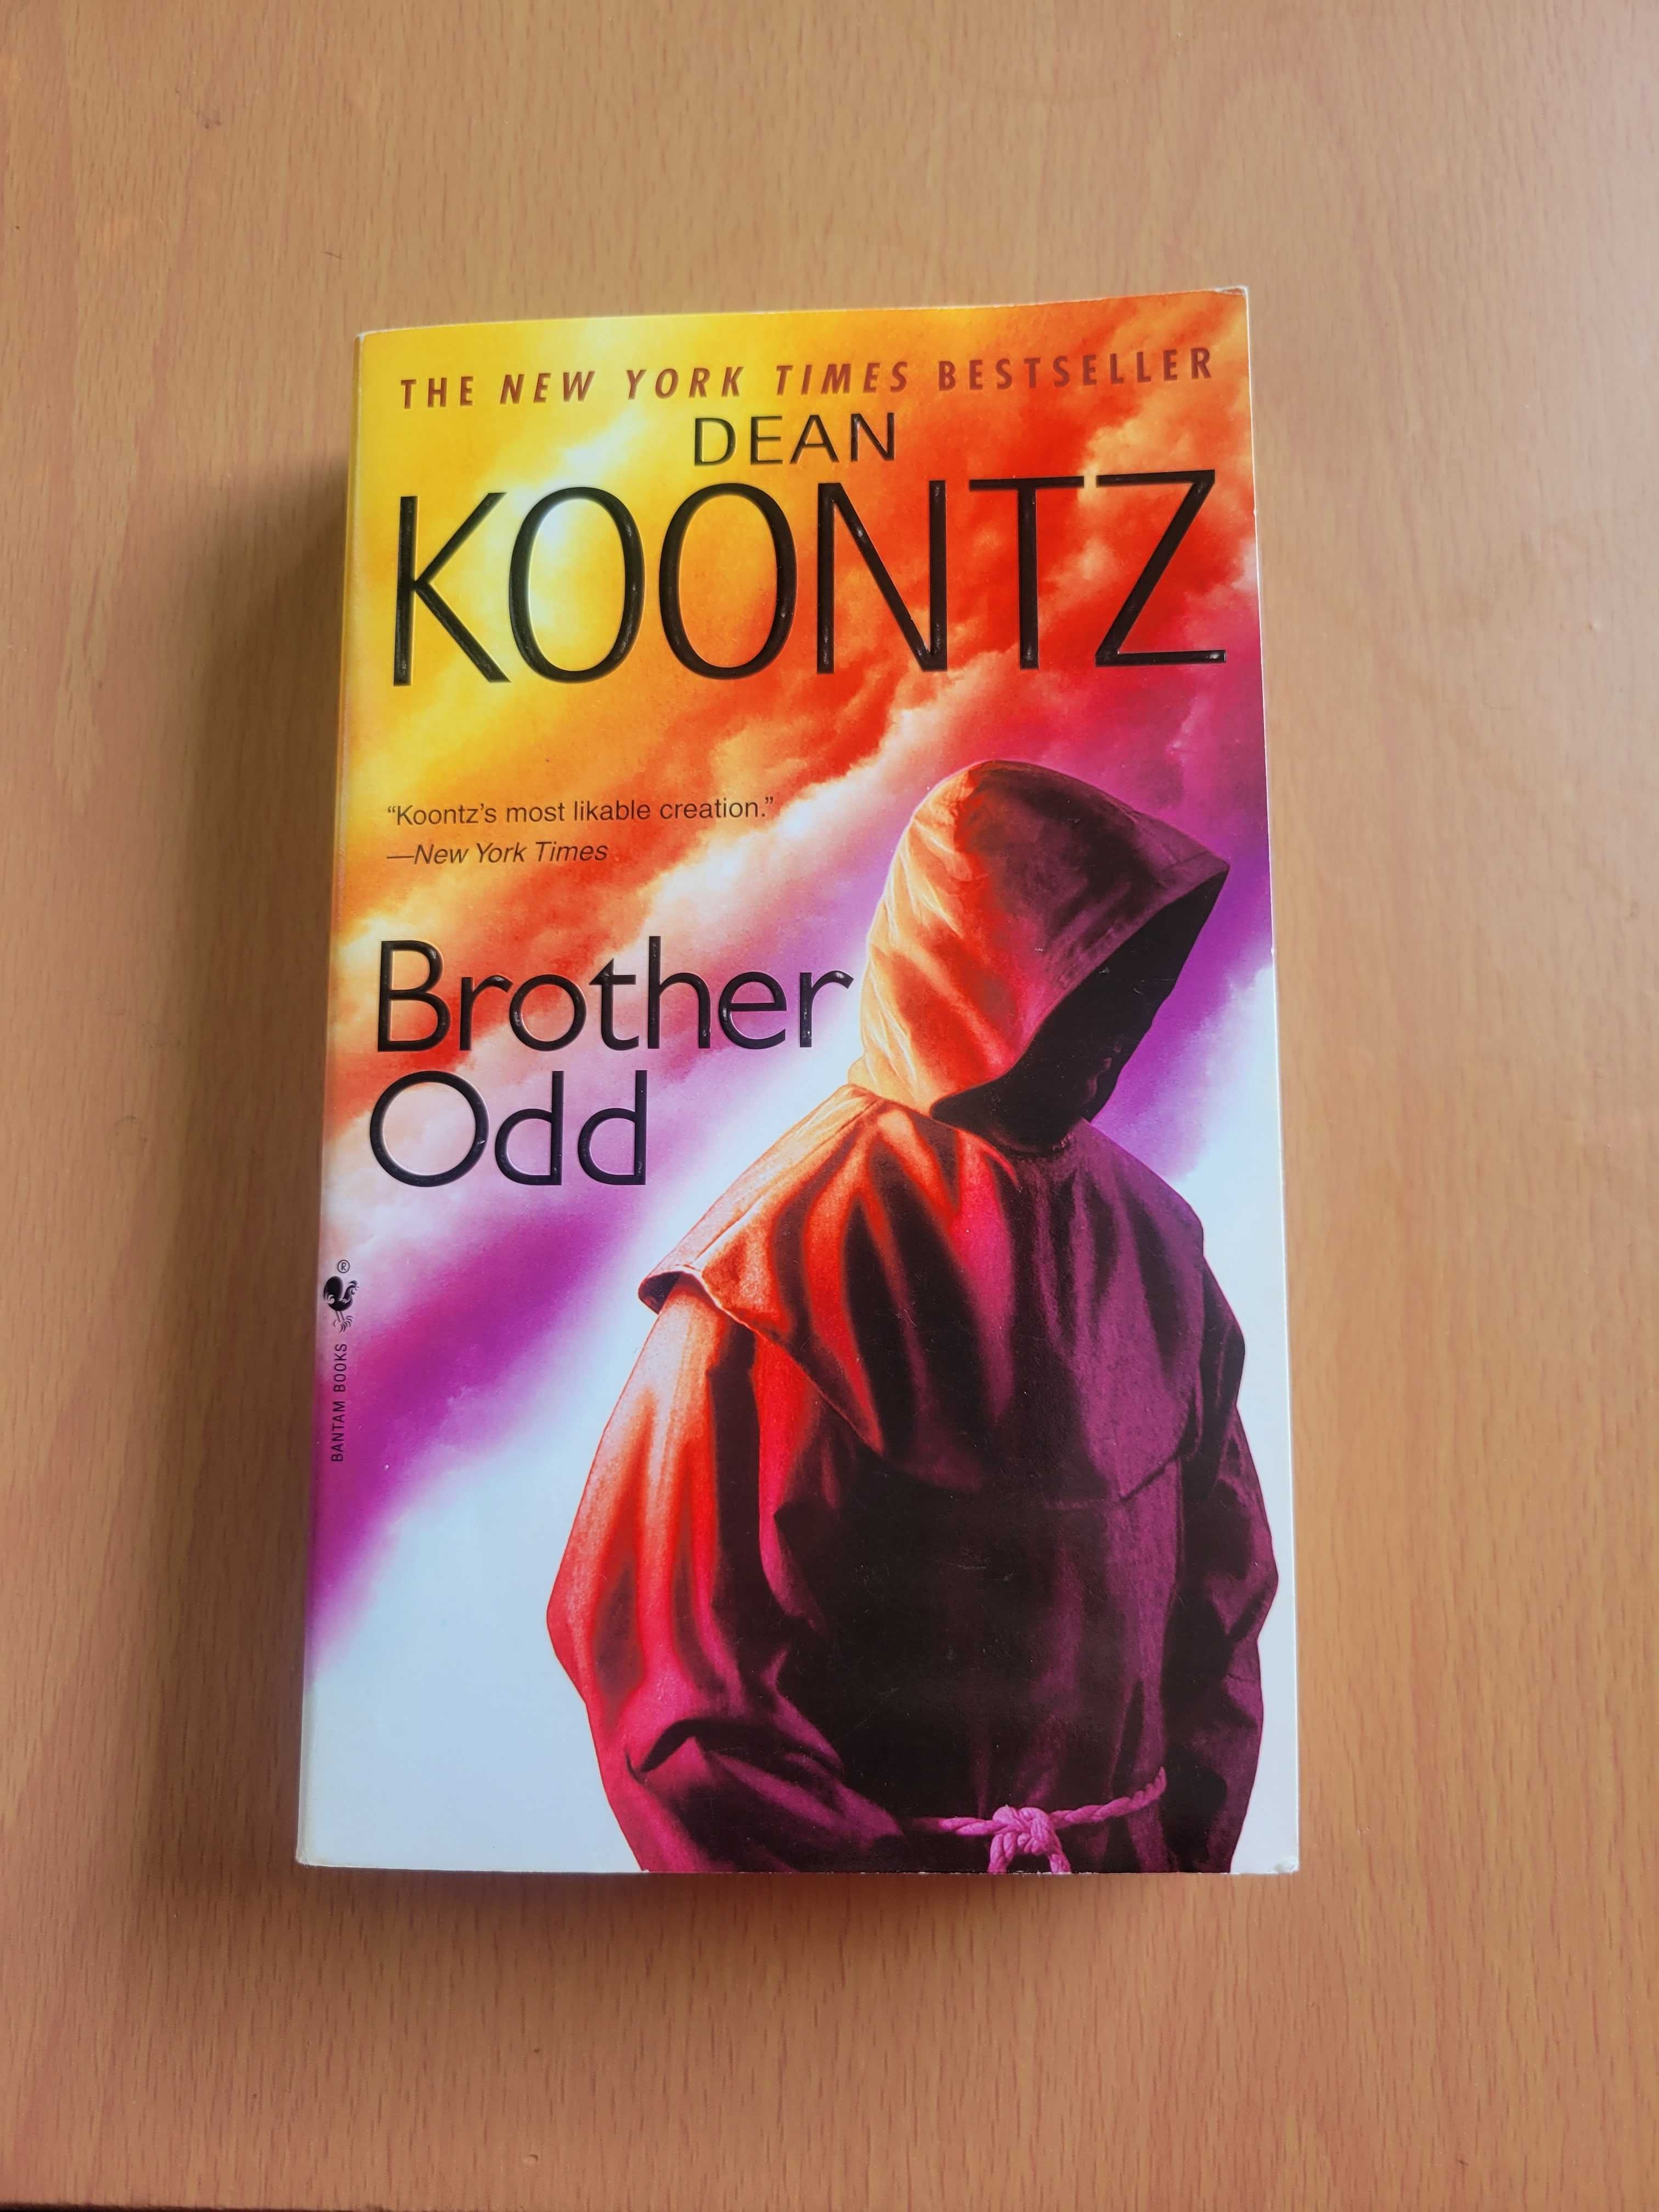 Dean Koontz - Brother Odd